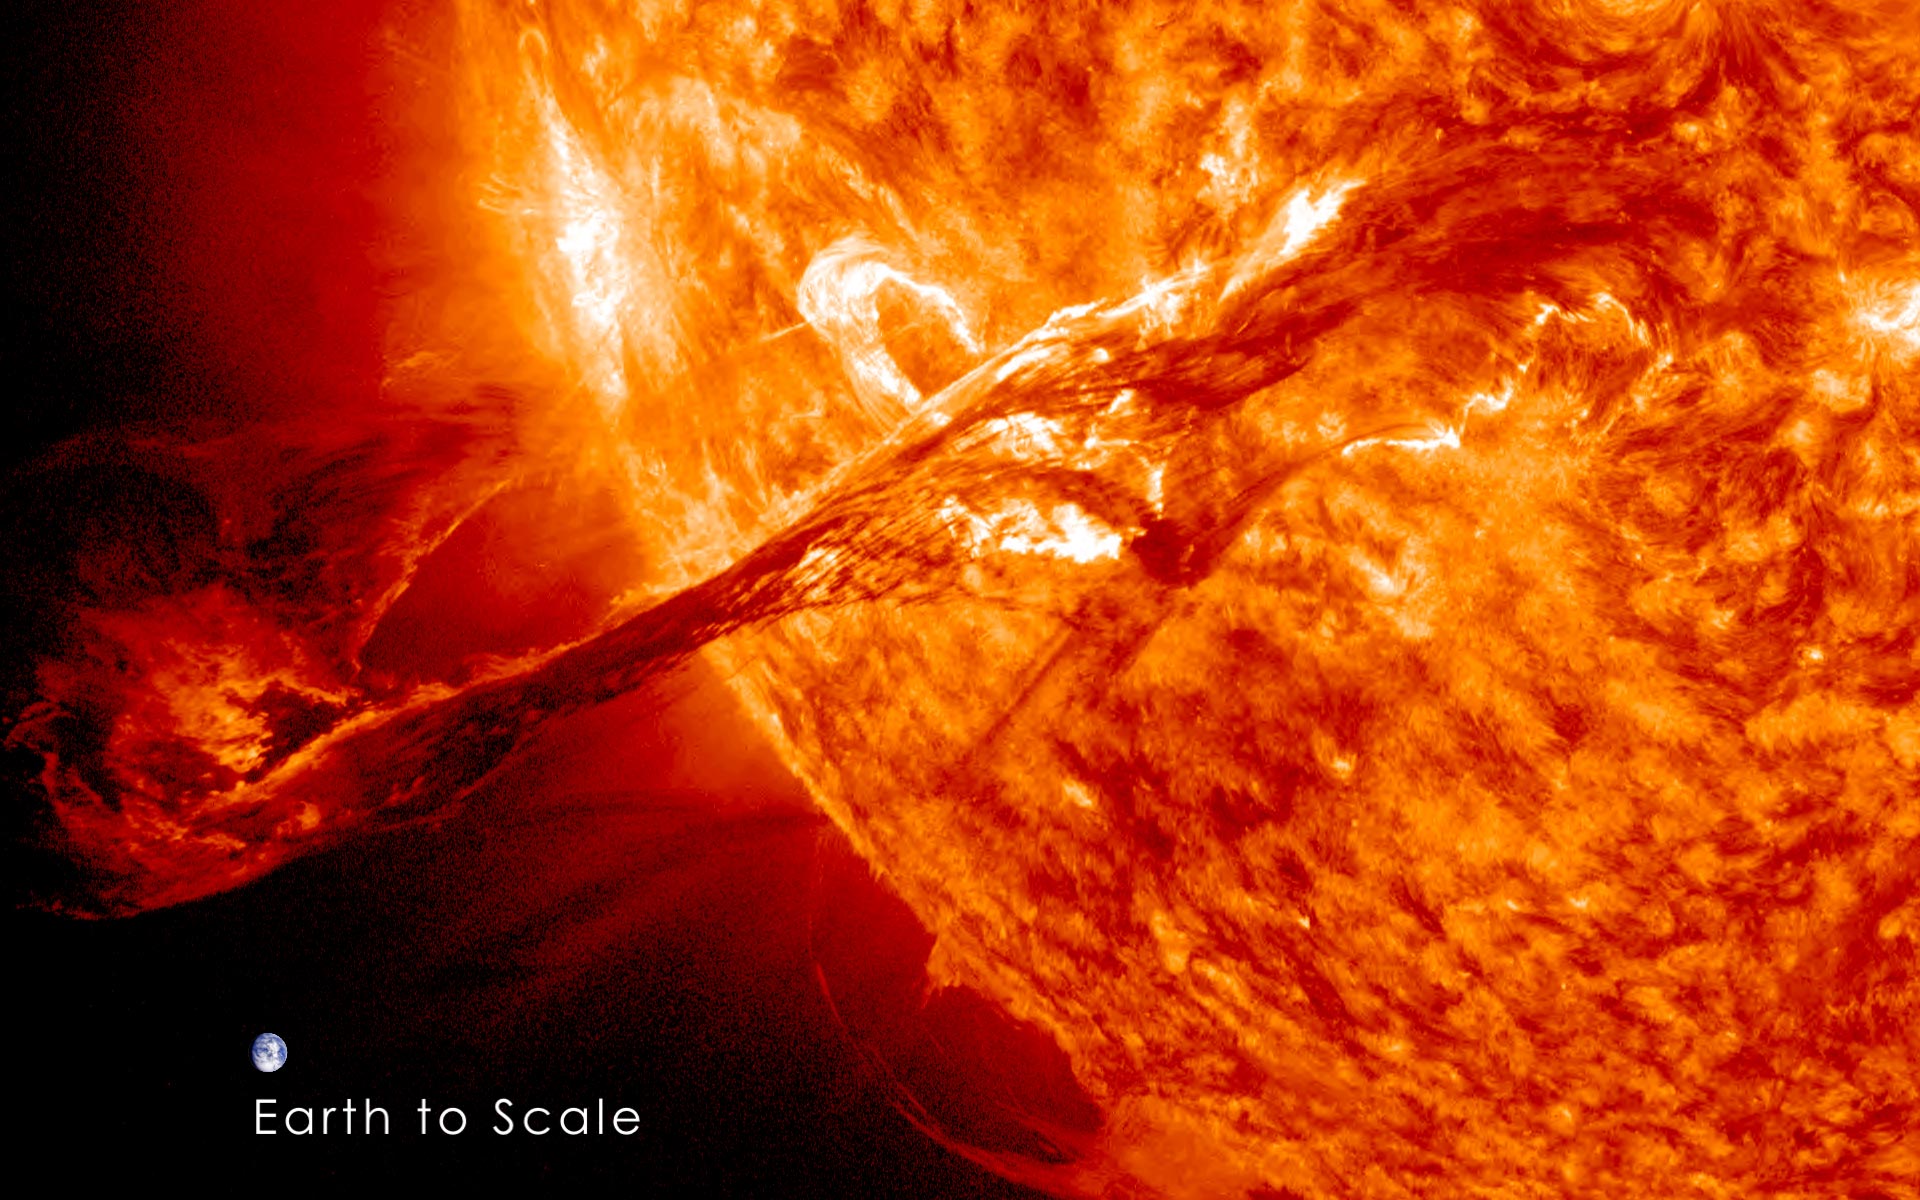 Unusual â€œRosetta Stoneâ€ Solar Eruption Could Help Explain Mysterious Powerful Explosions on the Sun - SciTechDaily